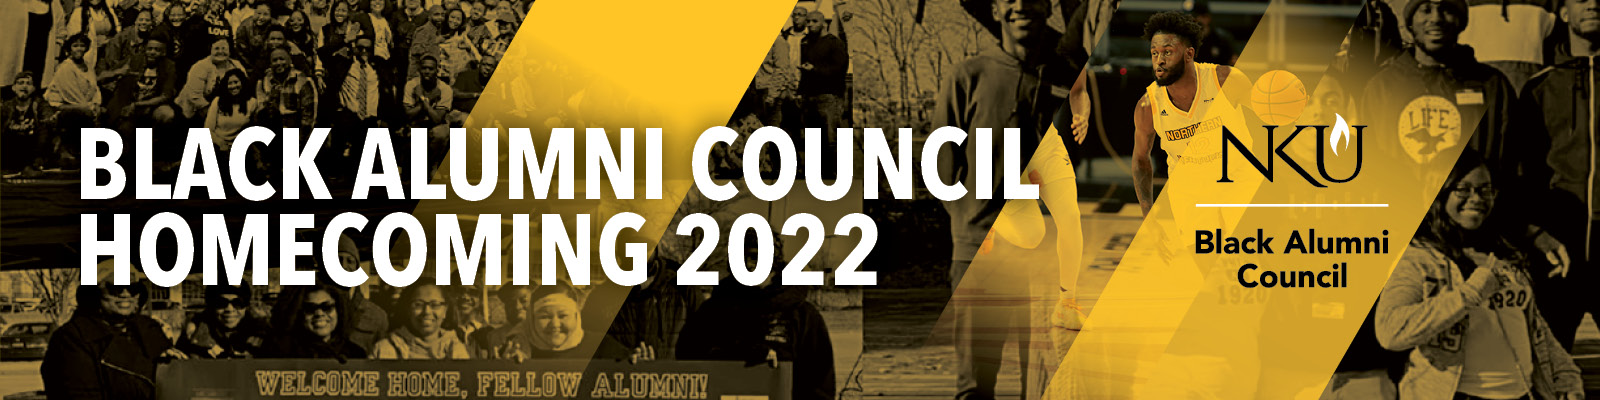 Black Alumni Council Homecoming 2022.